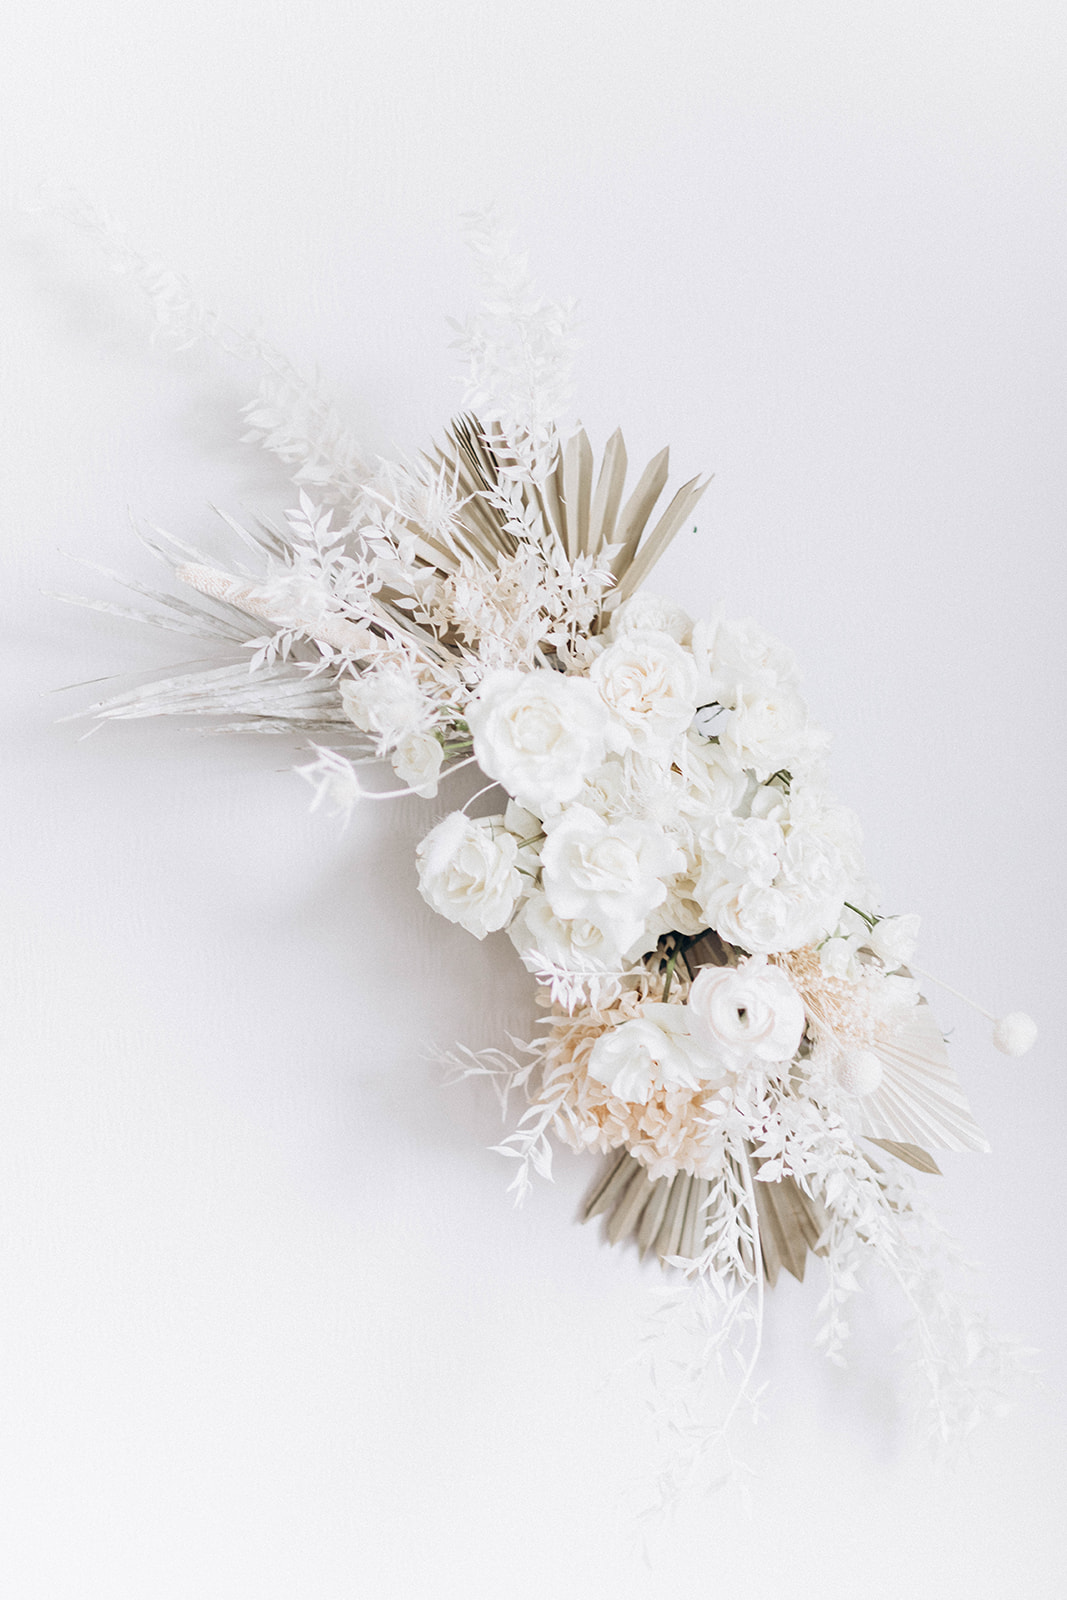 Modern Ivory & White Wedding Inspiration - Chic Bridal Style featured on the Brontë Bride Blog